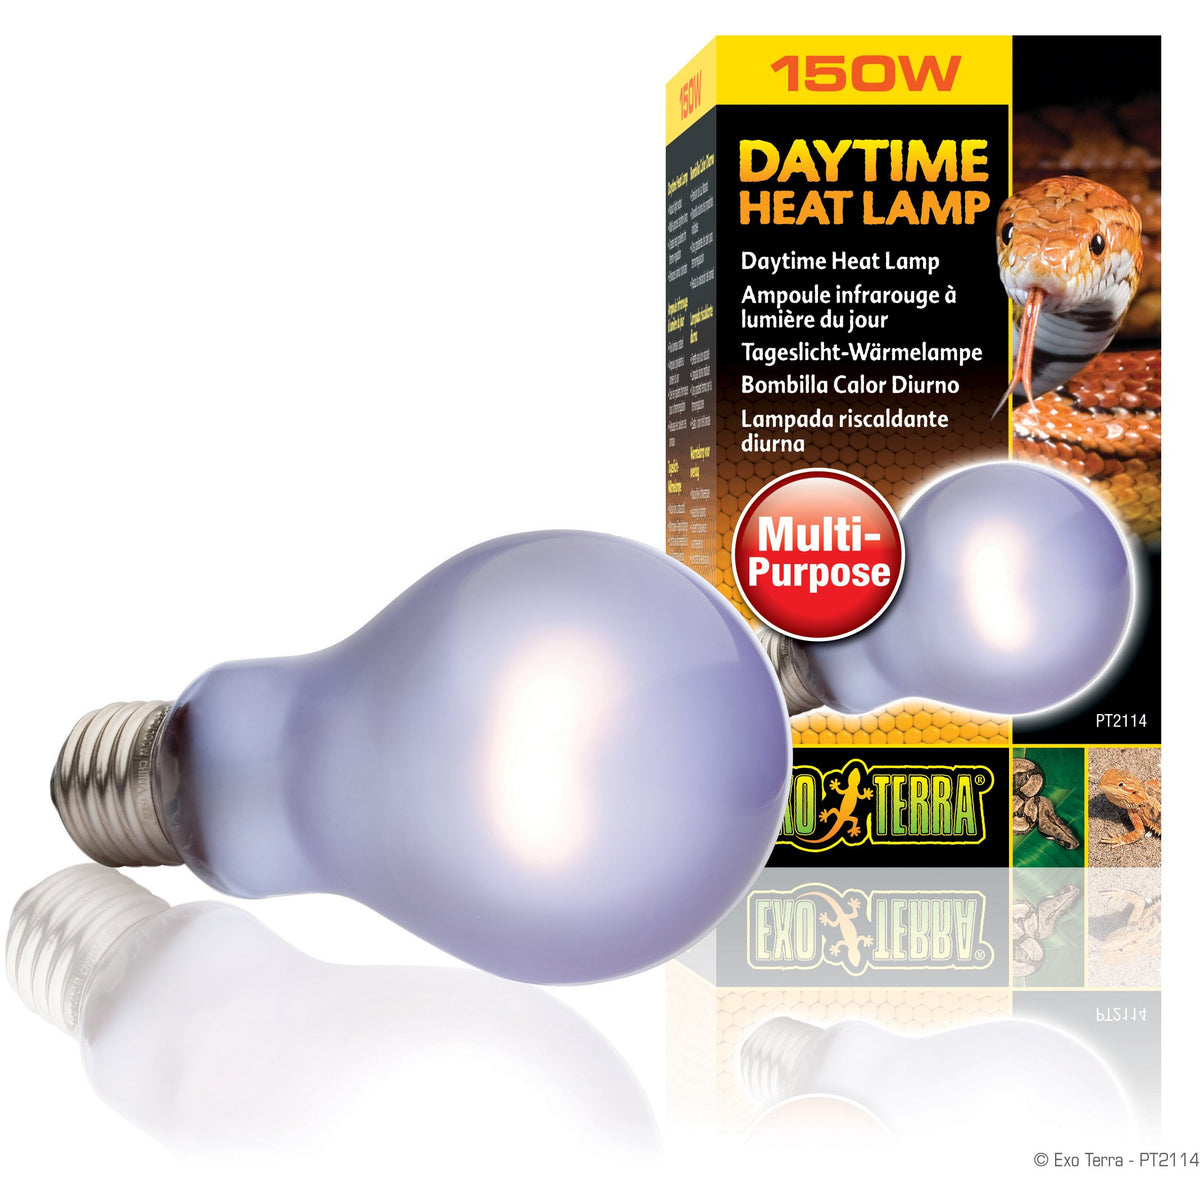 Exo Terra Daytime Heat Lamp - A21 / 150 W